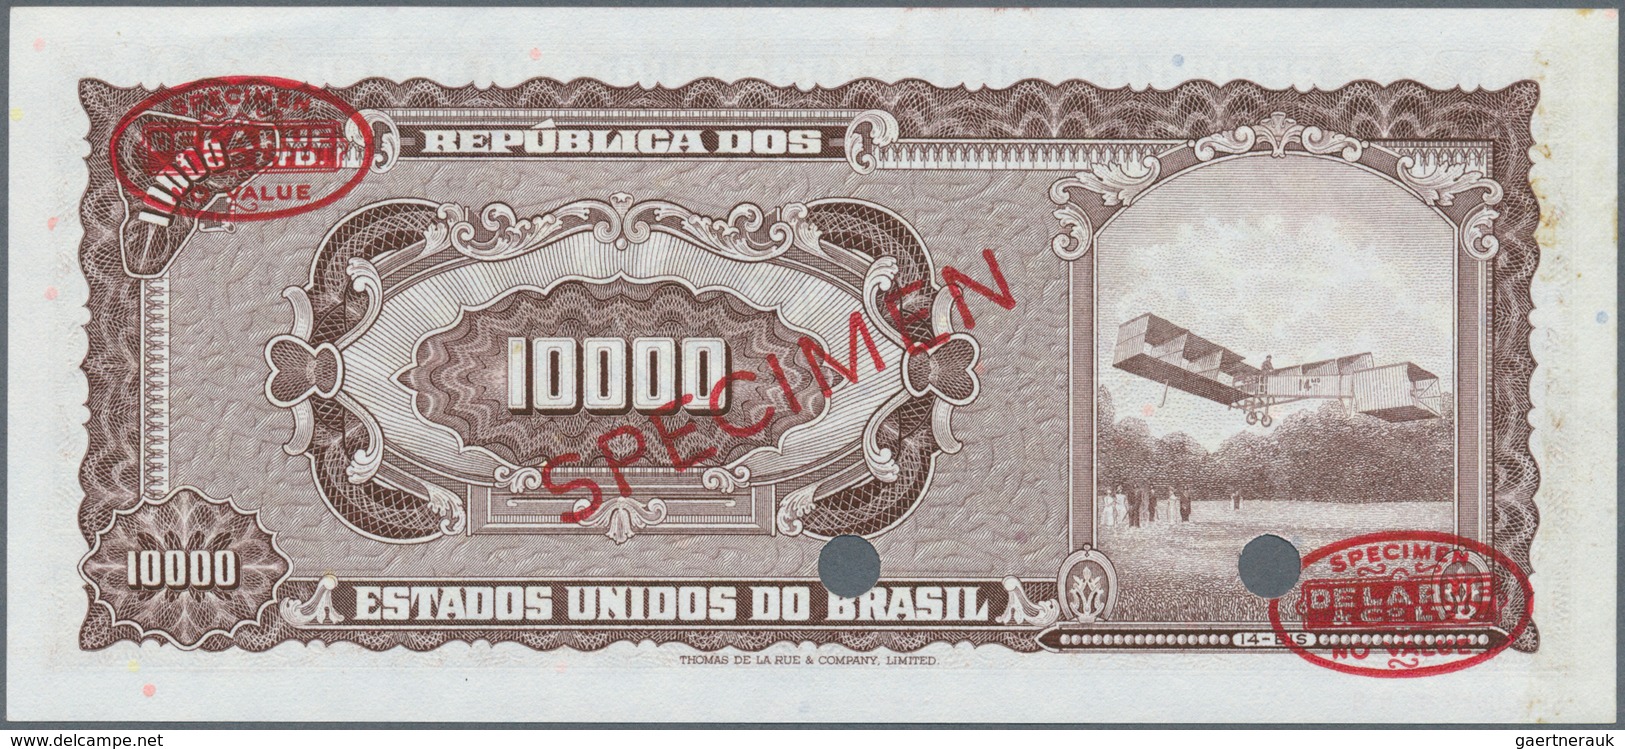 Brazil / Brasilien:  Banco Central Do Brasil 10 Cruzeiros Novos On 10.000 Cruzeiros ND(1967) Specime - Brasil